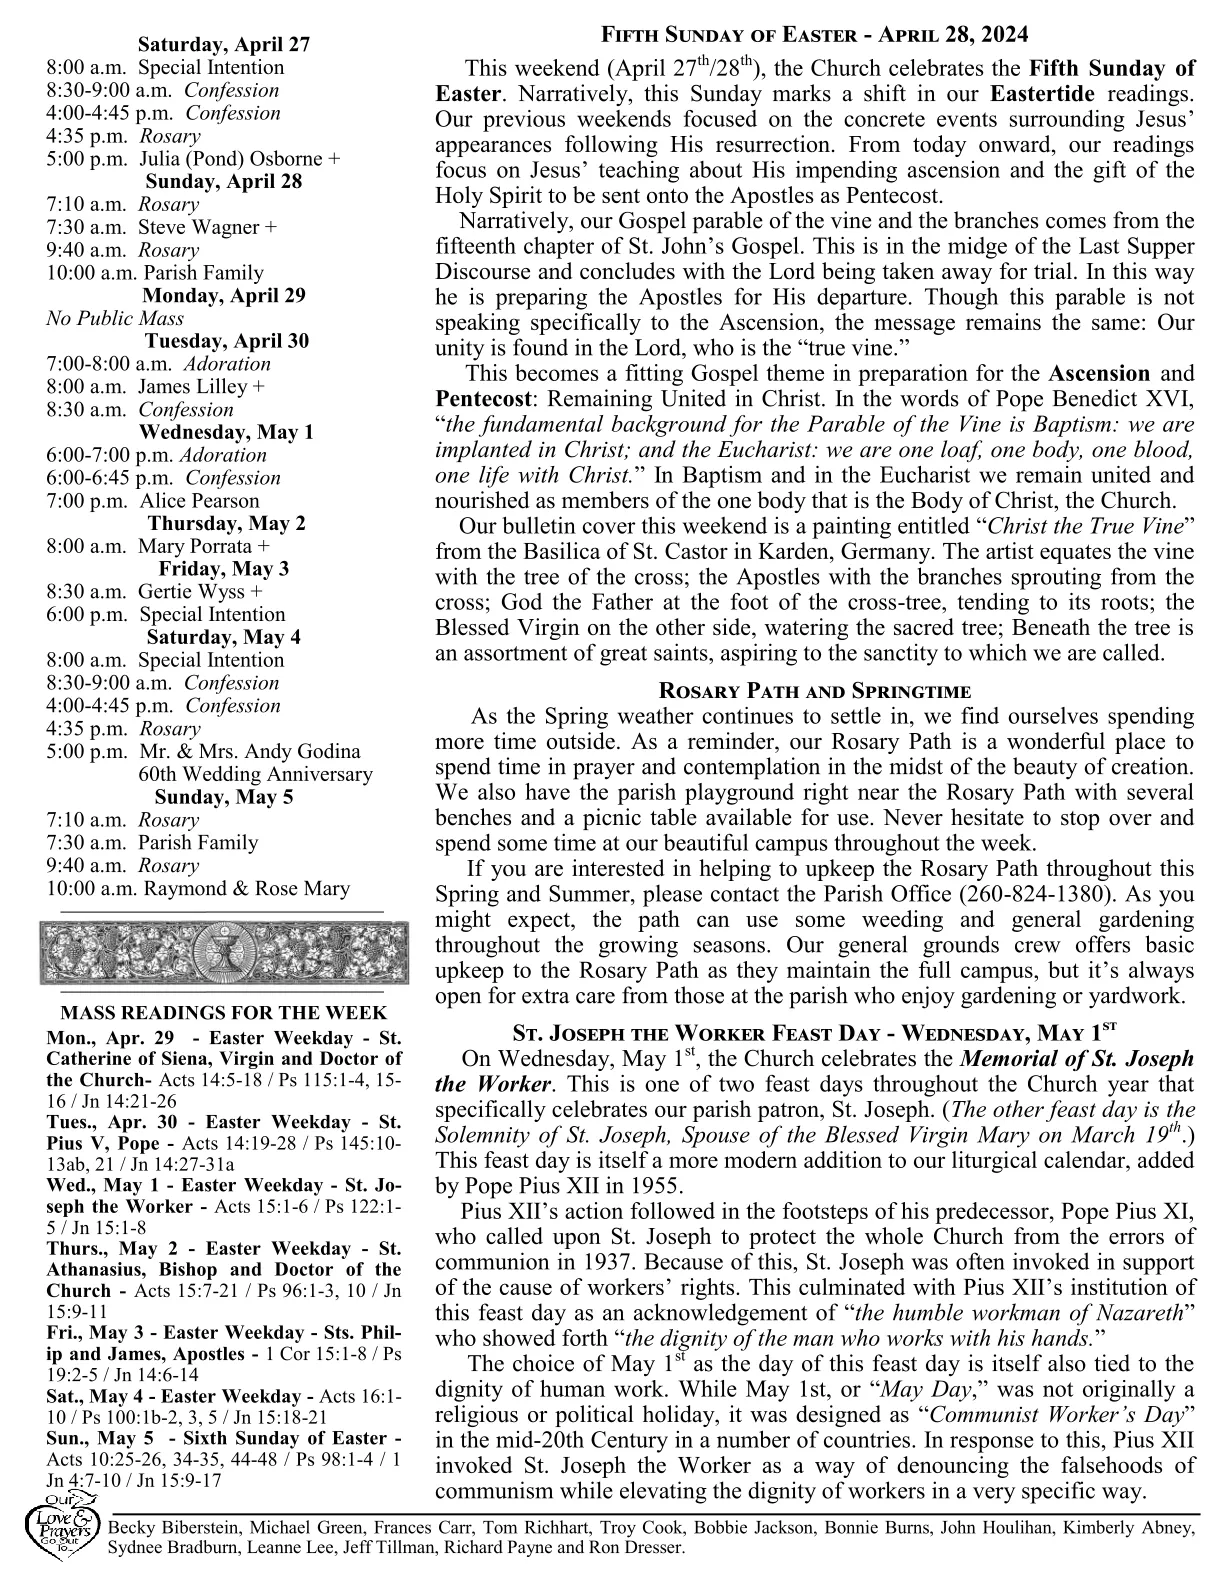 Apr 28, 2024 - Bulletin - Page 2